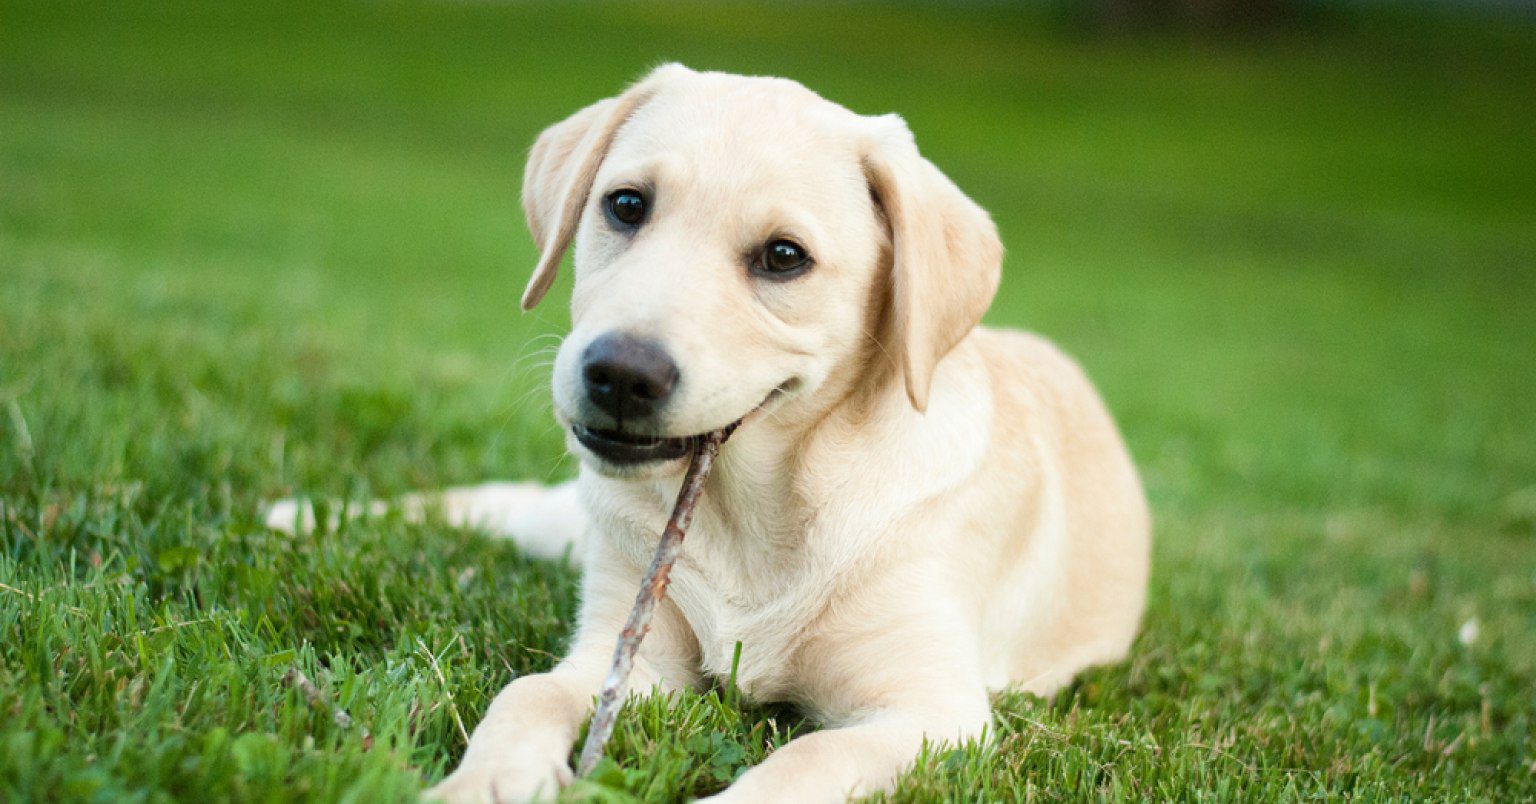 Photograph of a Labrador Retriever chewing on a stick